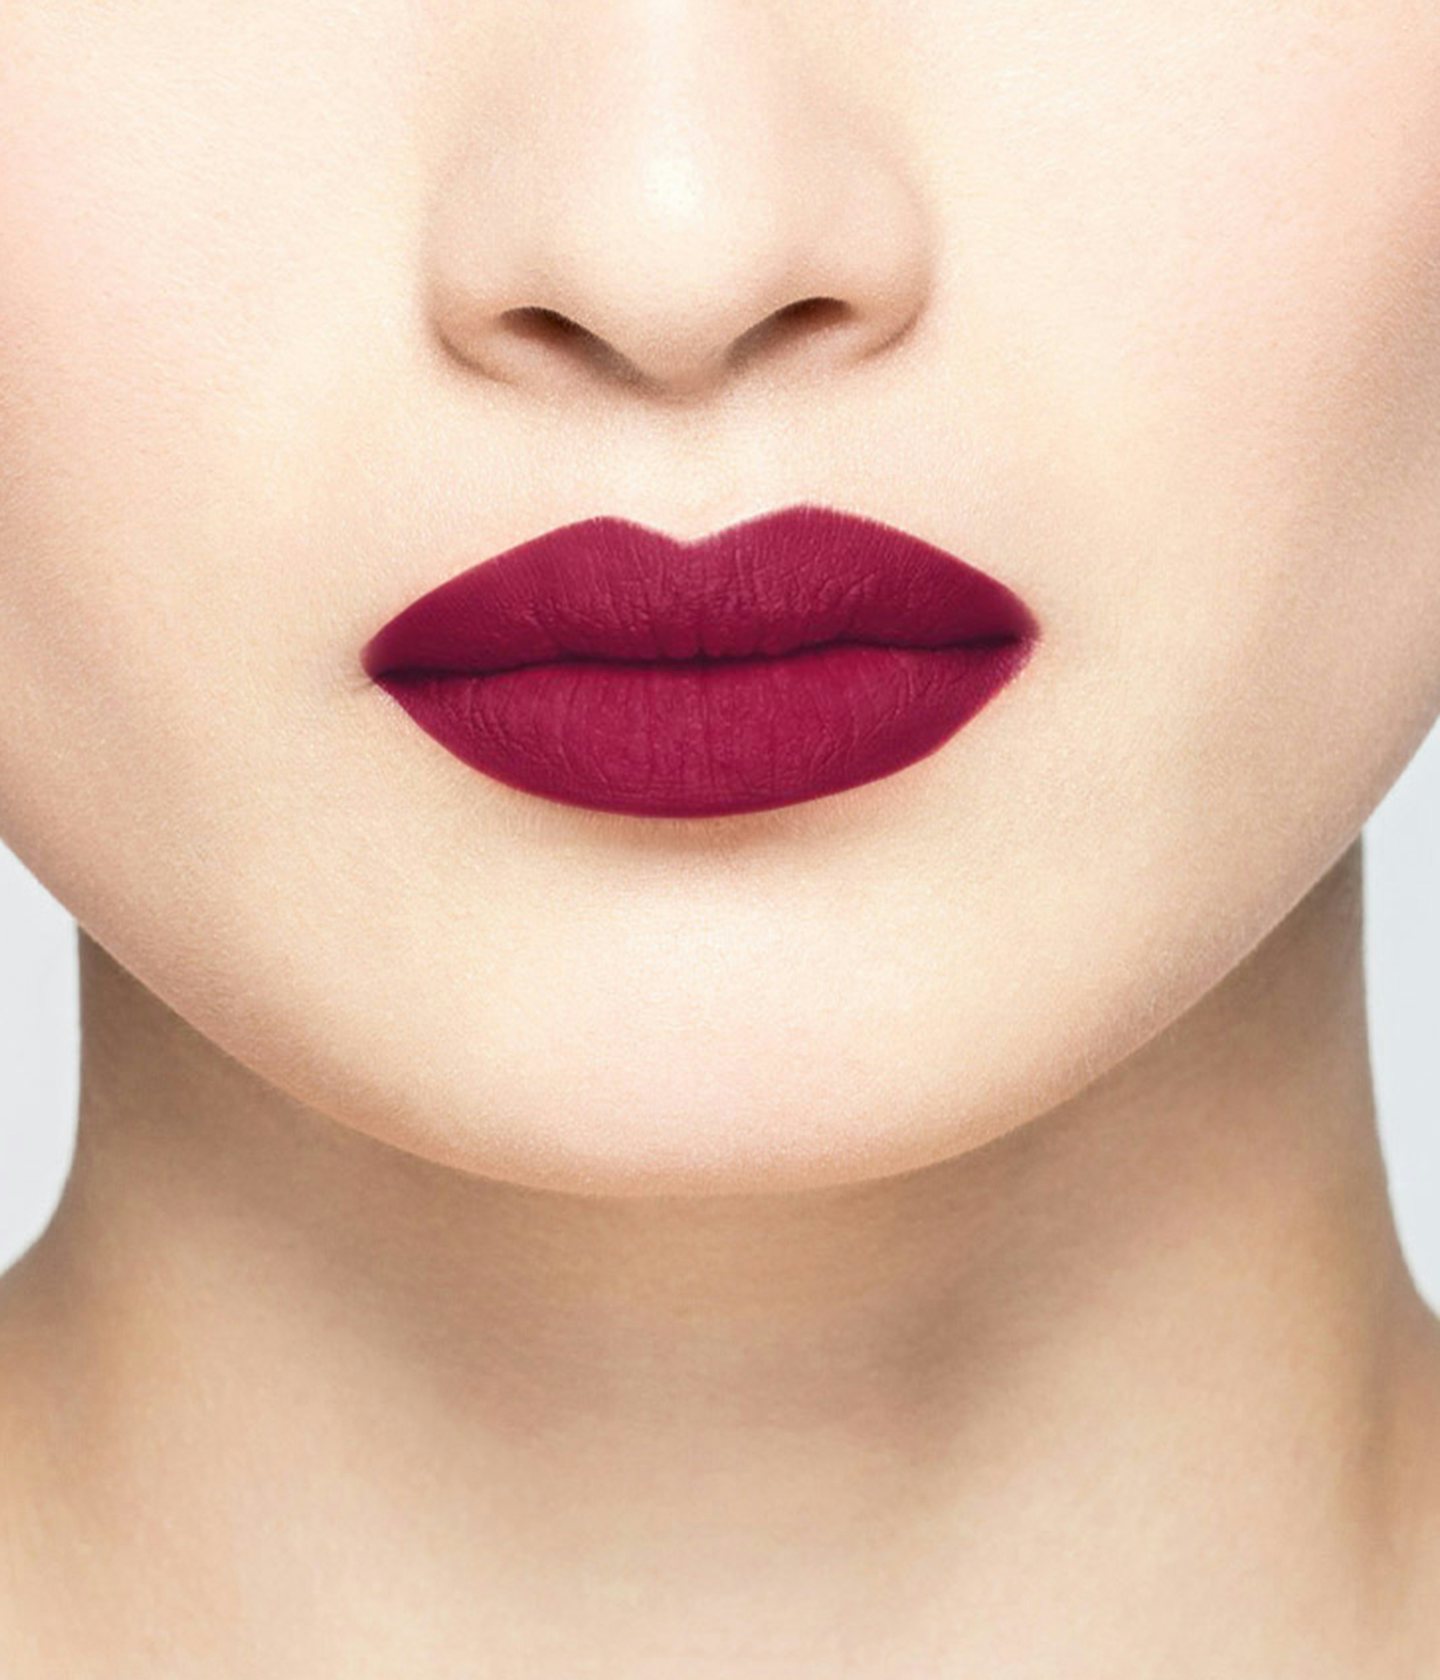 La bouche rougePlum lipstick shade on the lips of an Asian model